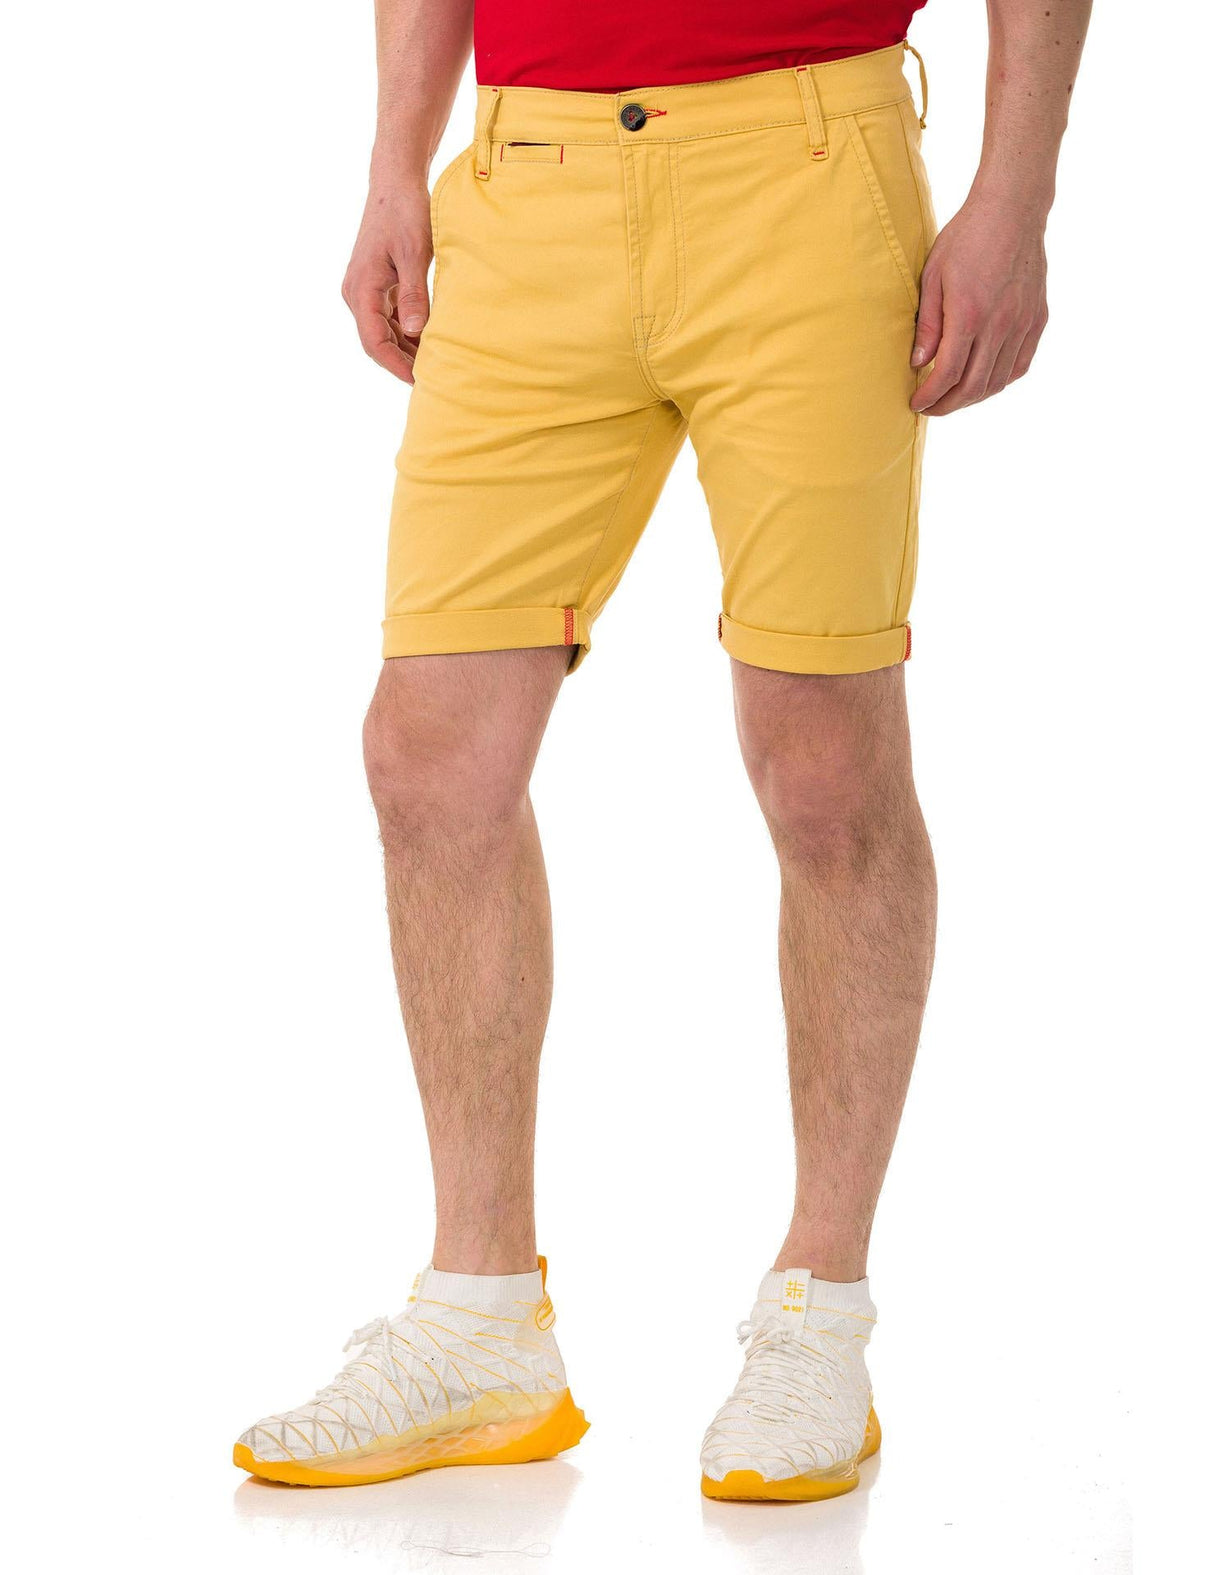 CK272 Heren Capri Shorts Casual Look